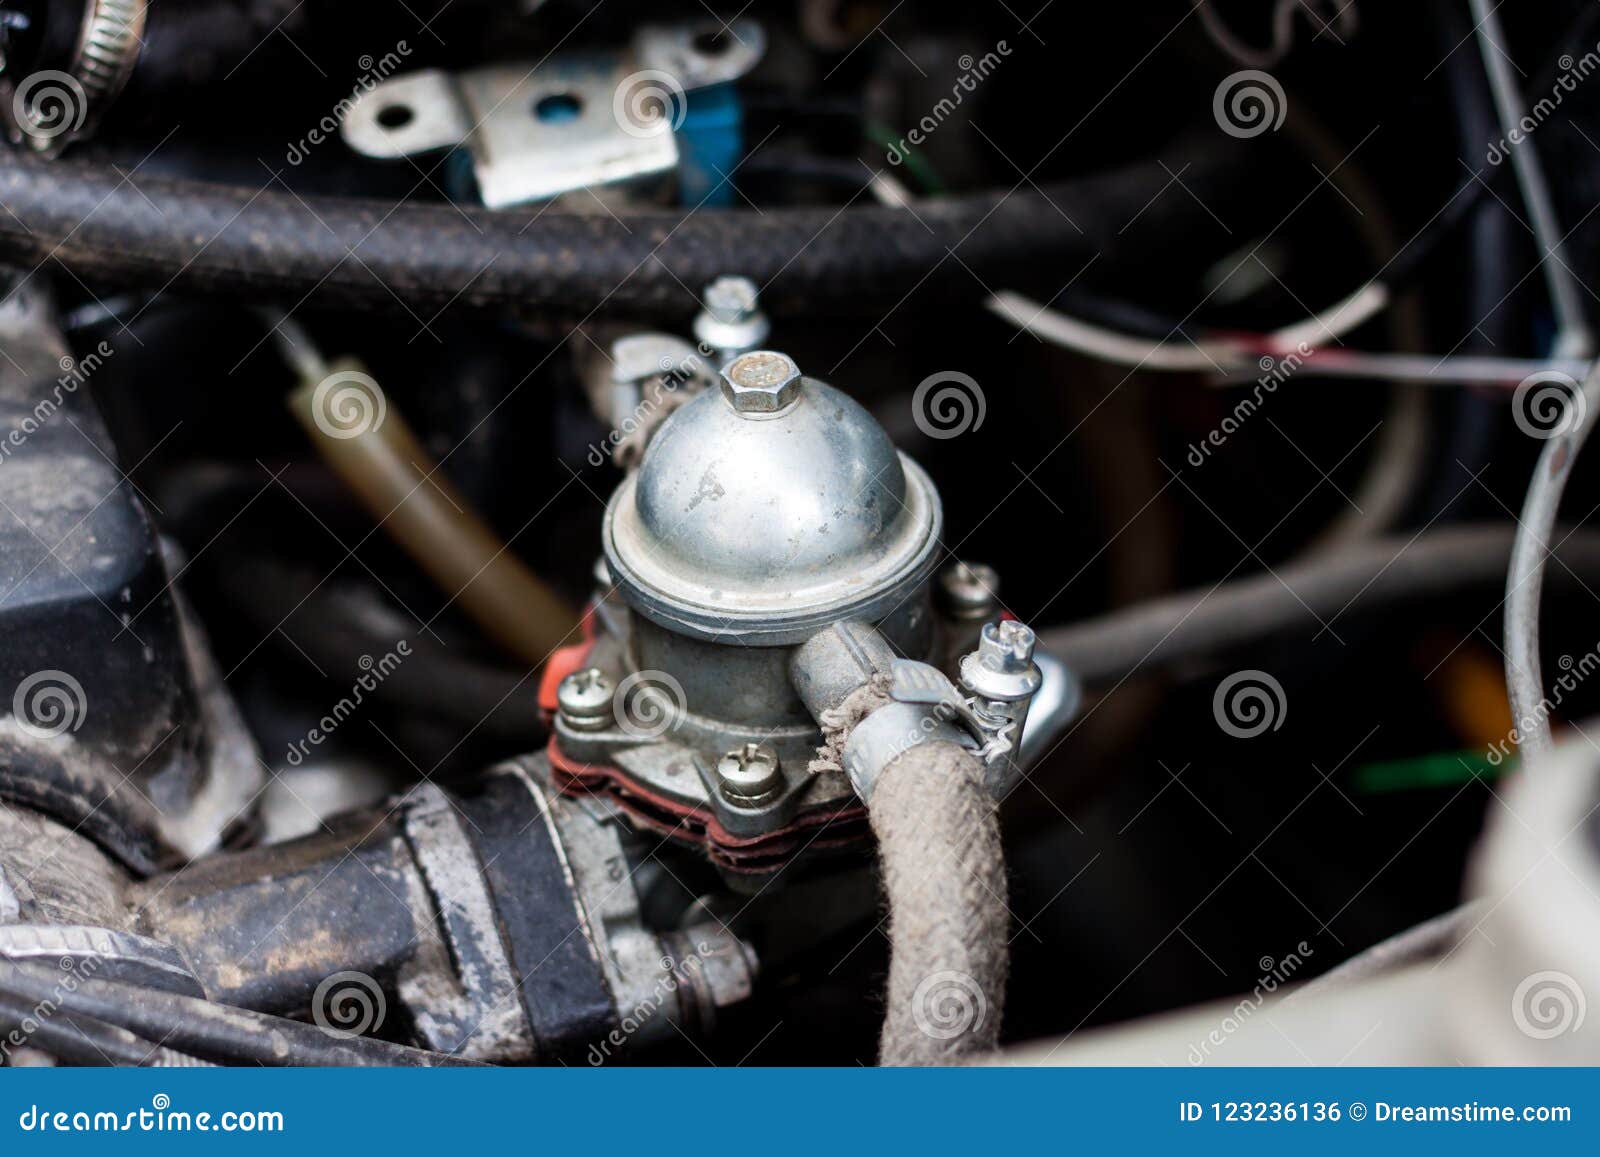 car engine repair service